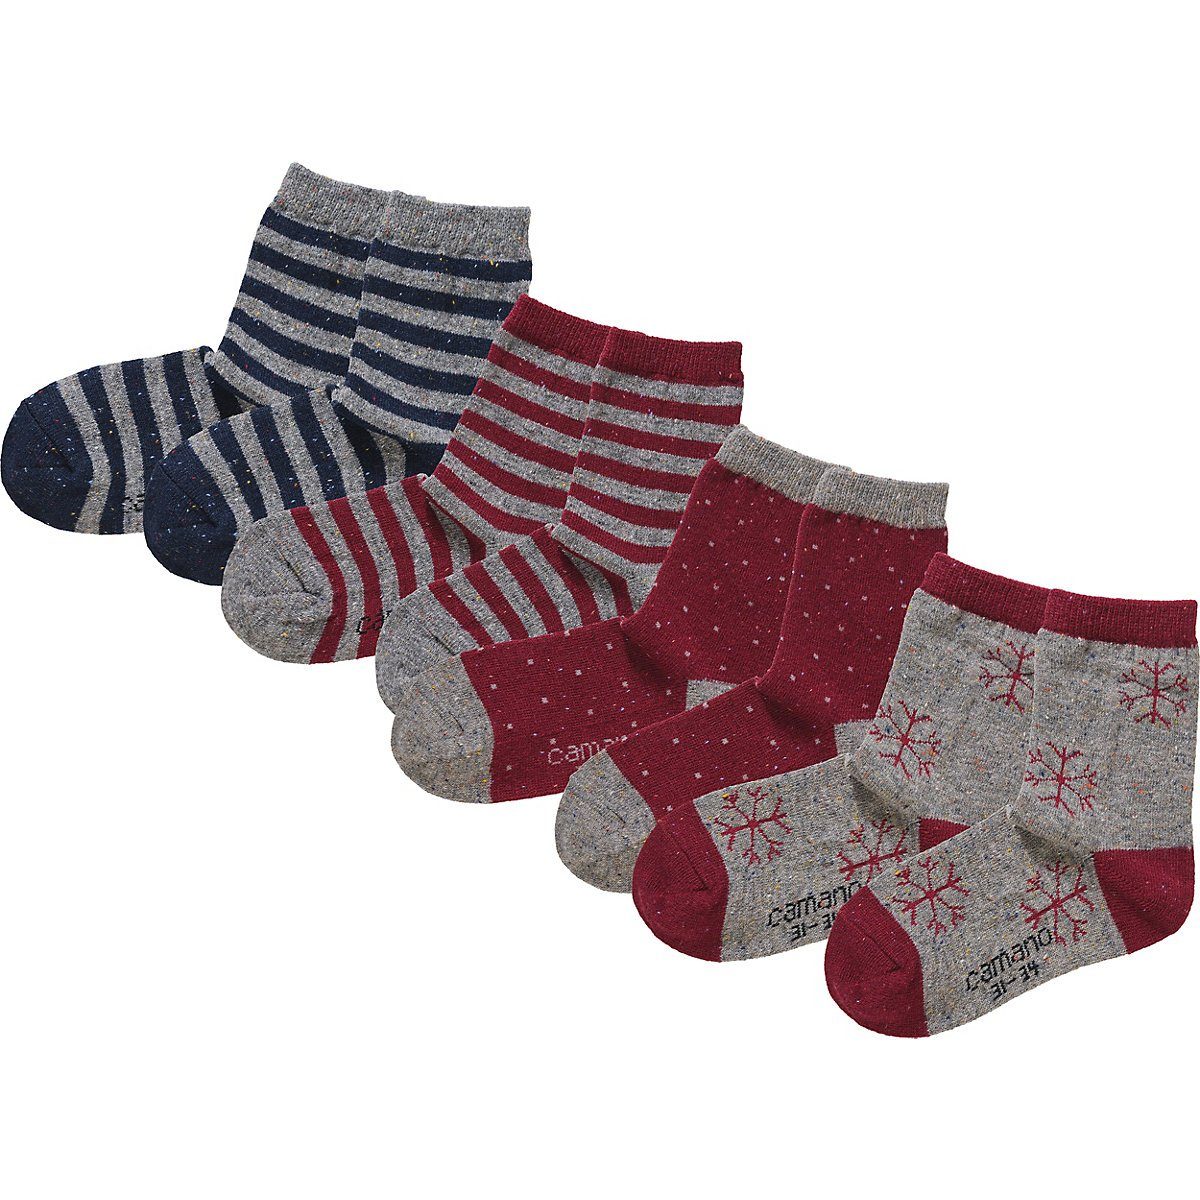 Camano Socken »Kinder Socken« online kaufen | OTTO